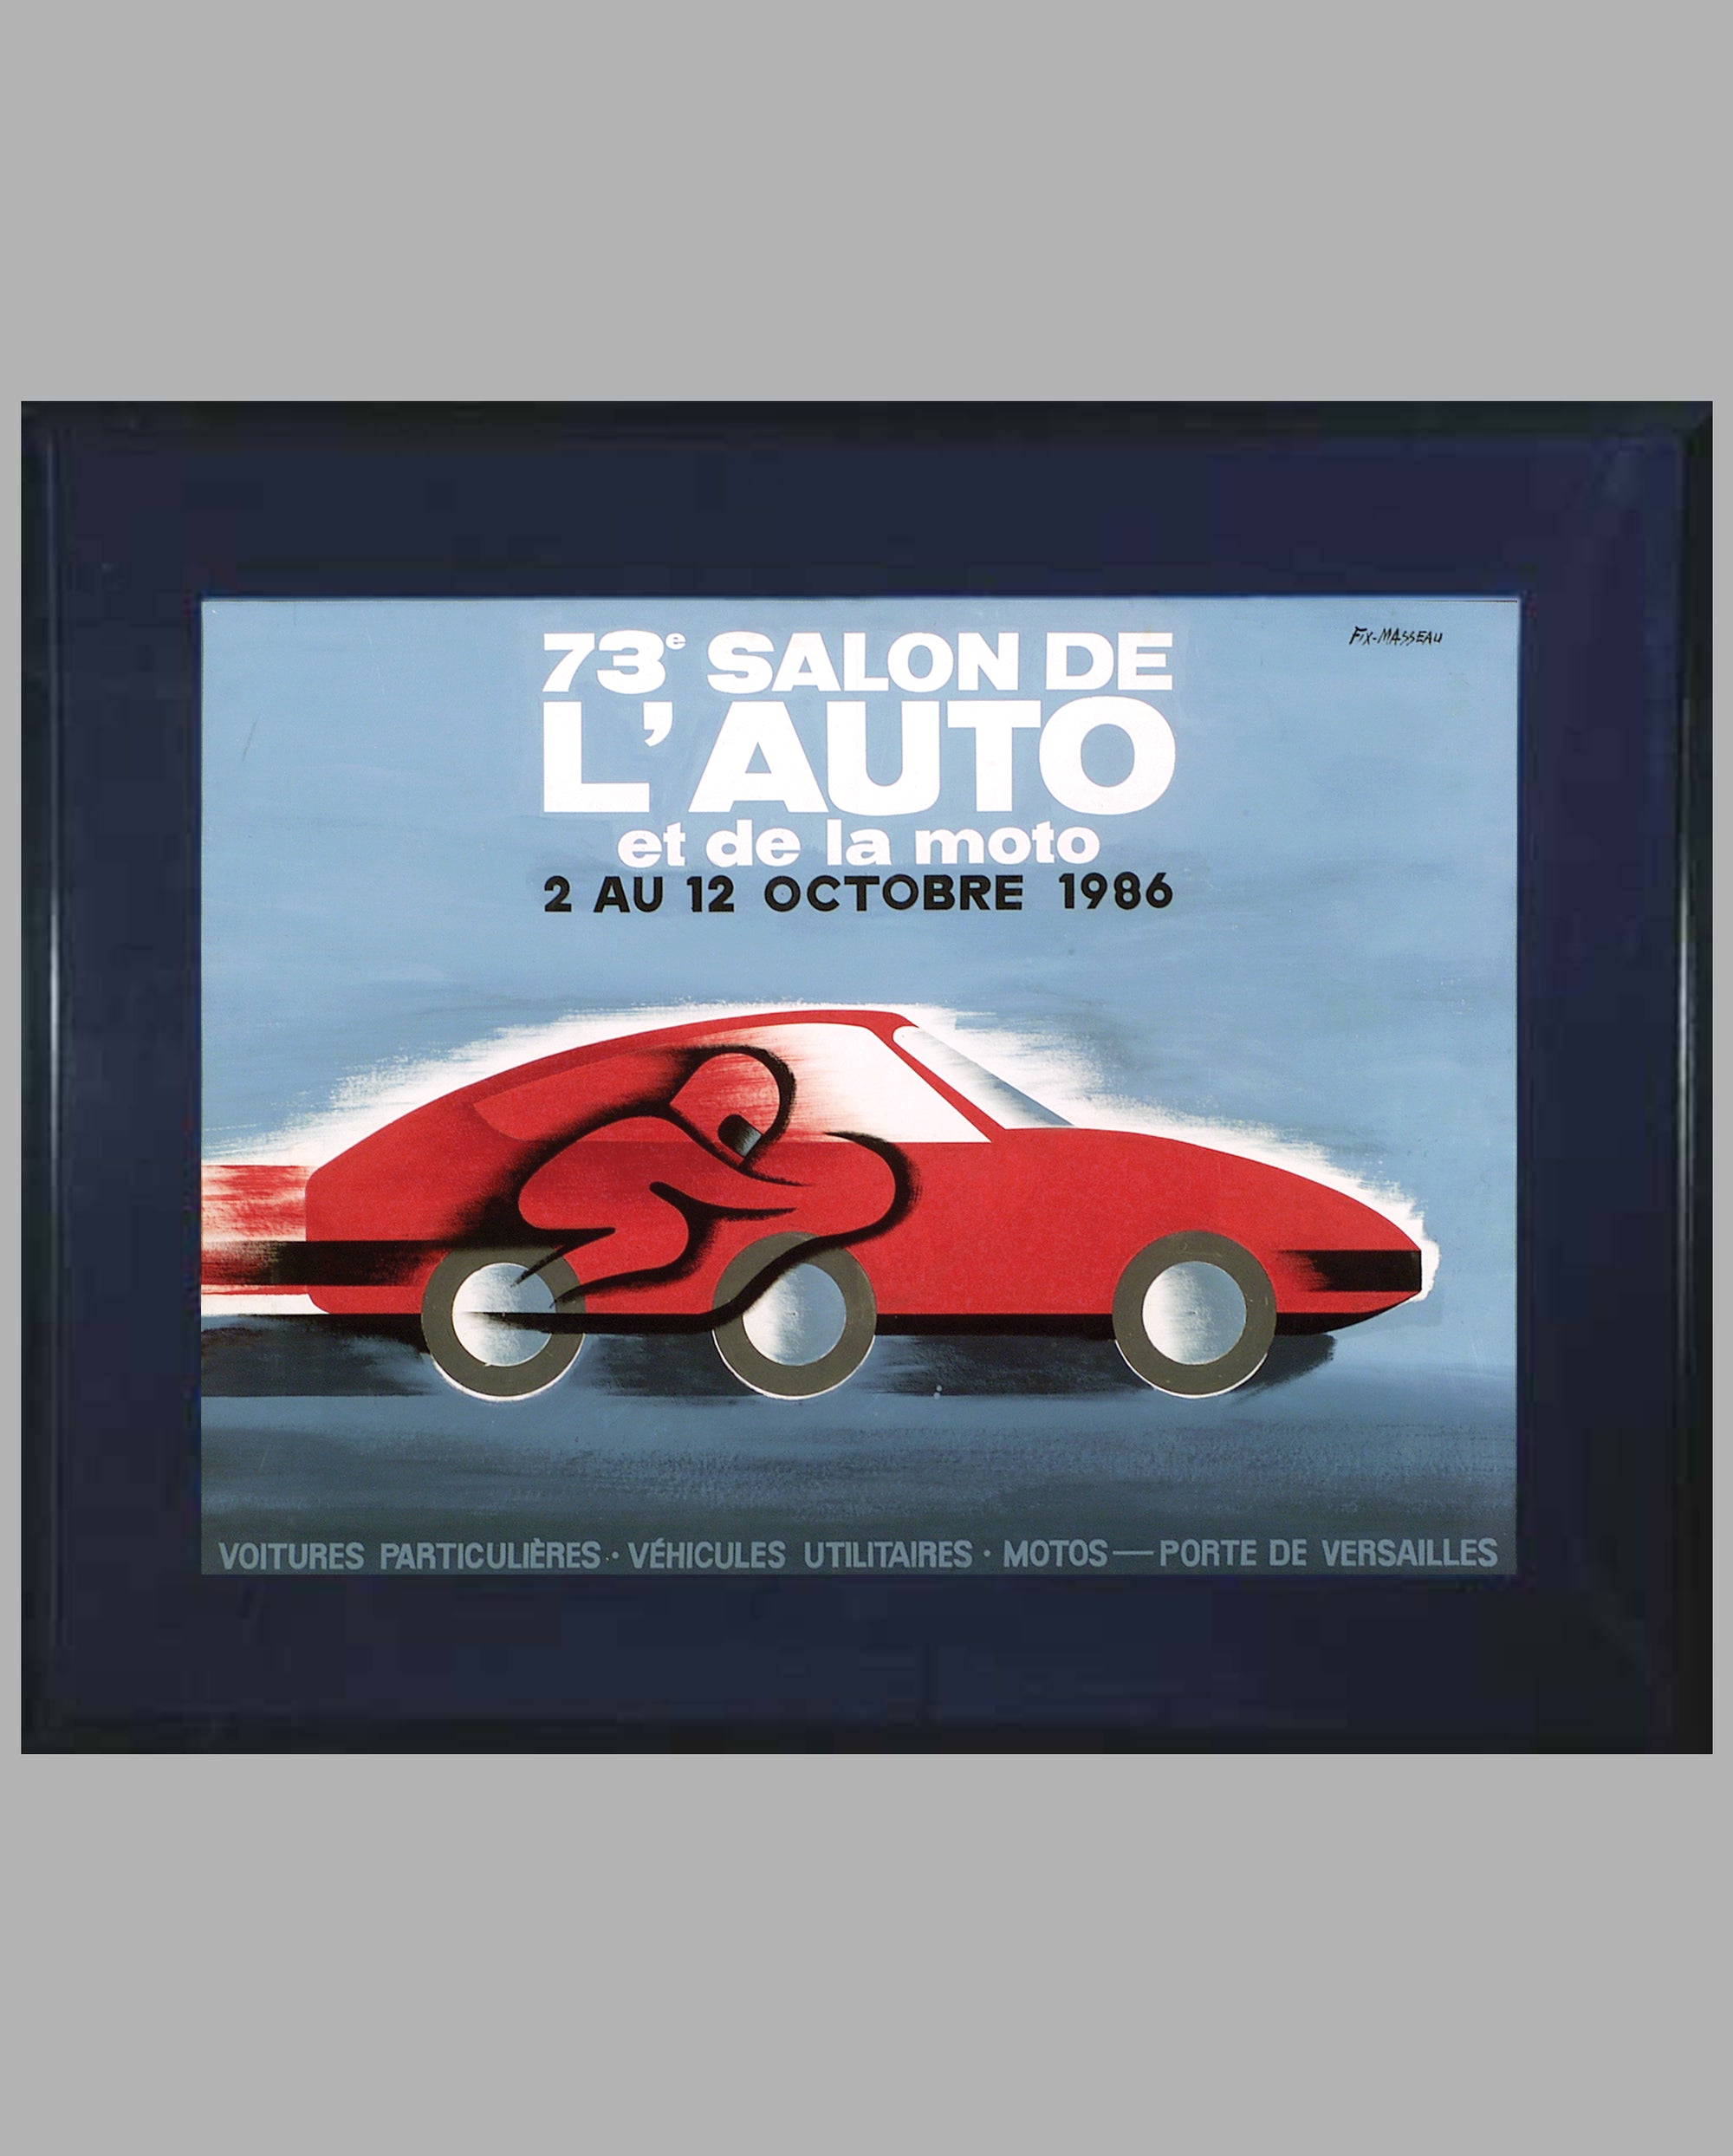 73rd Paris Auto & Motorcycle Show large painting by Pierre Fix-Masseau, France, 1986